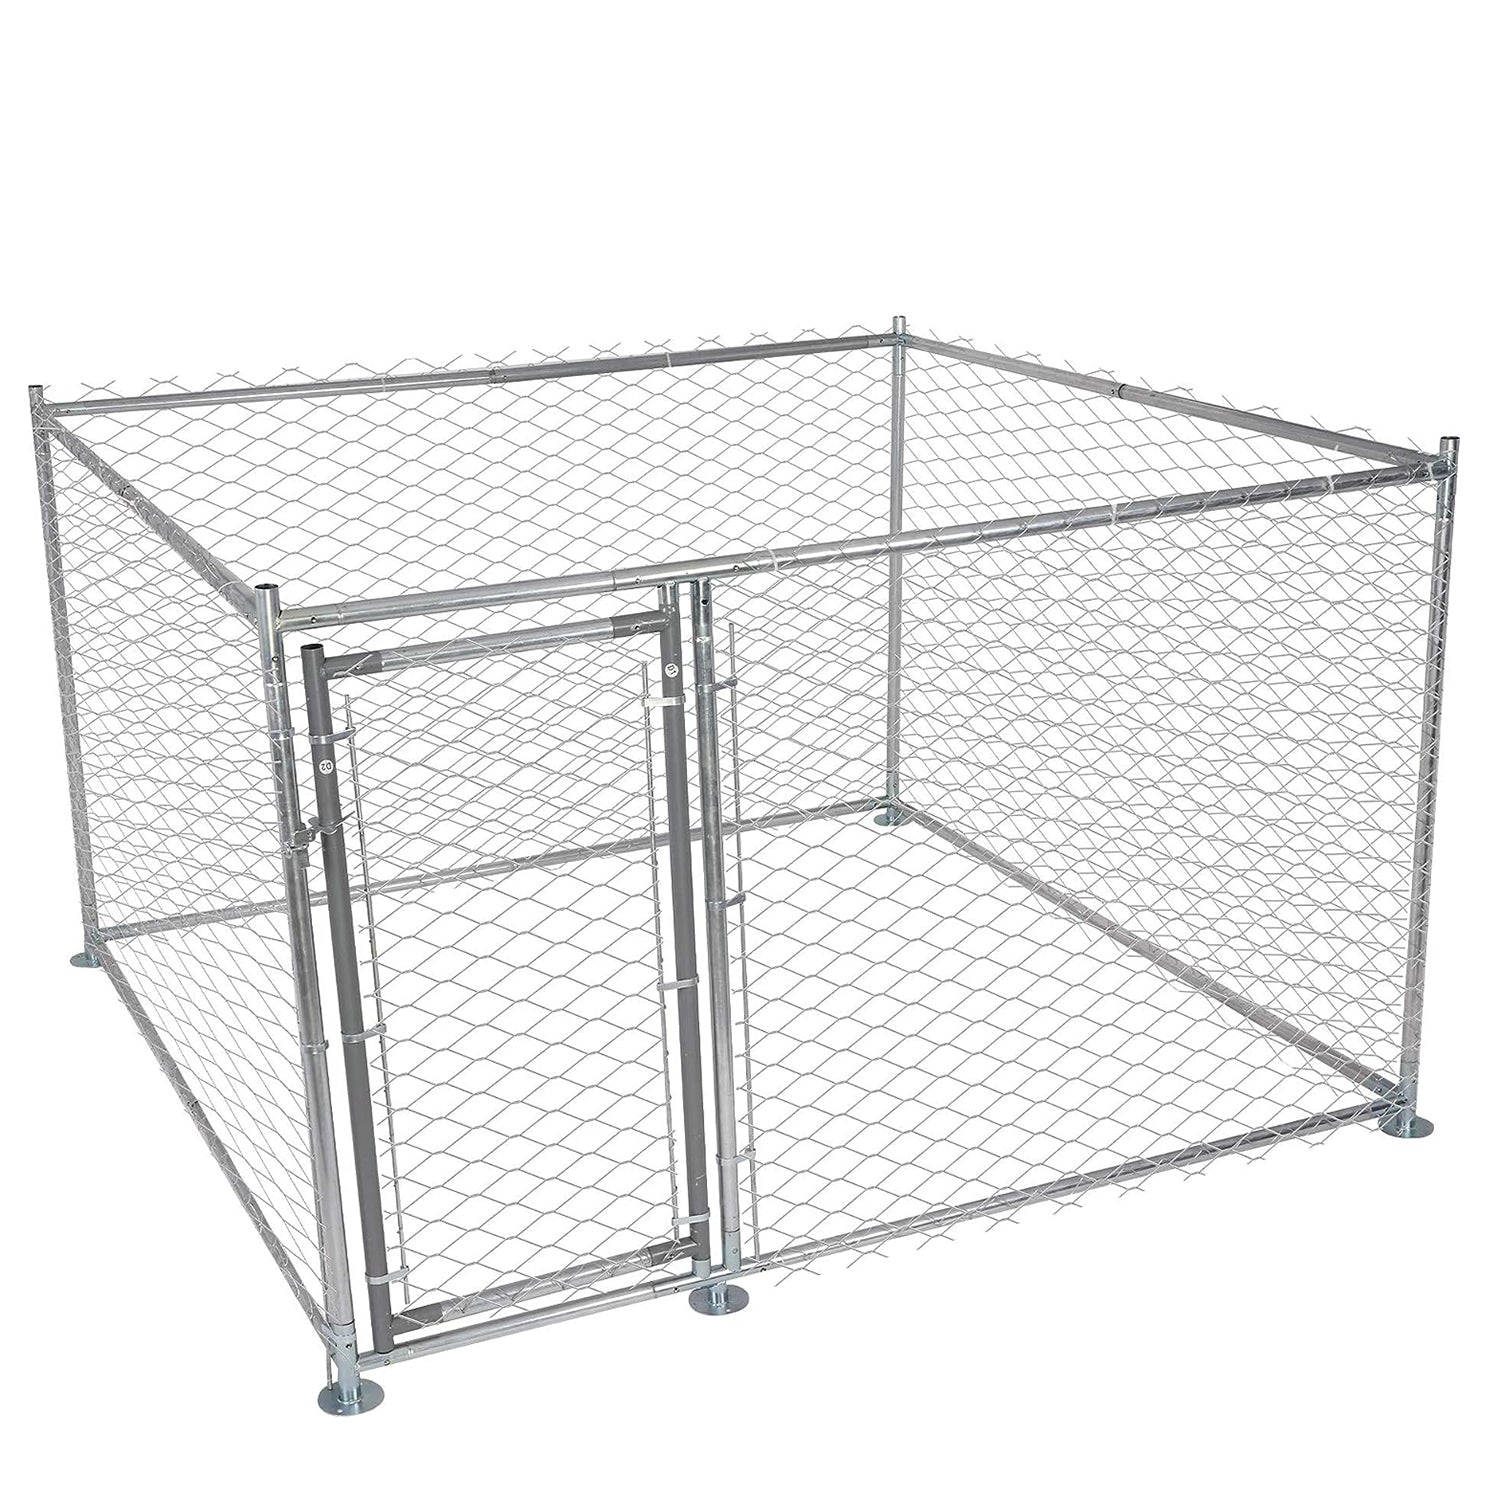 Outdoor Dog Kennel Heavy Duty Galvanized Mesh Steel Fence Dog Playpen Run Cage w/ Secure Lock 6.6x6.6x4 ft